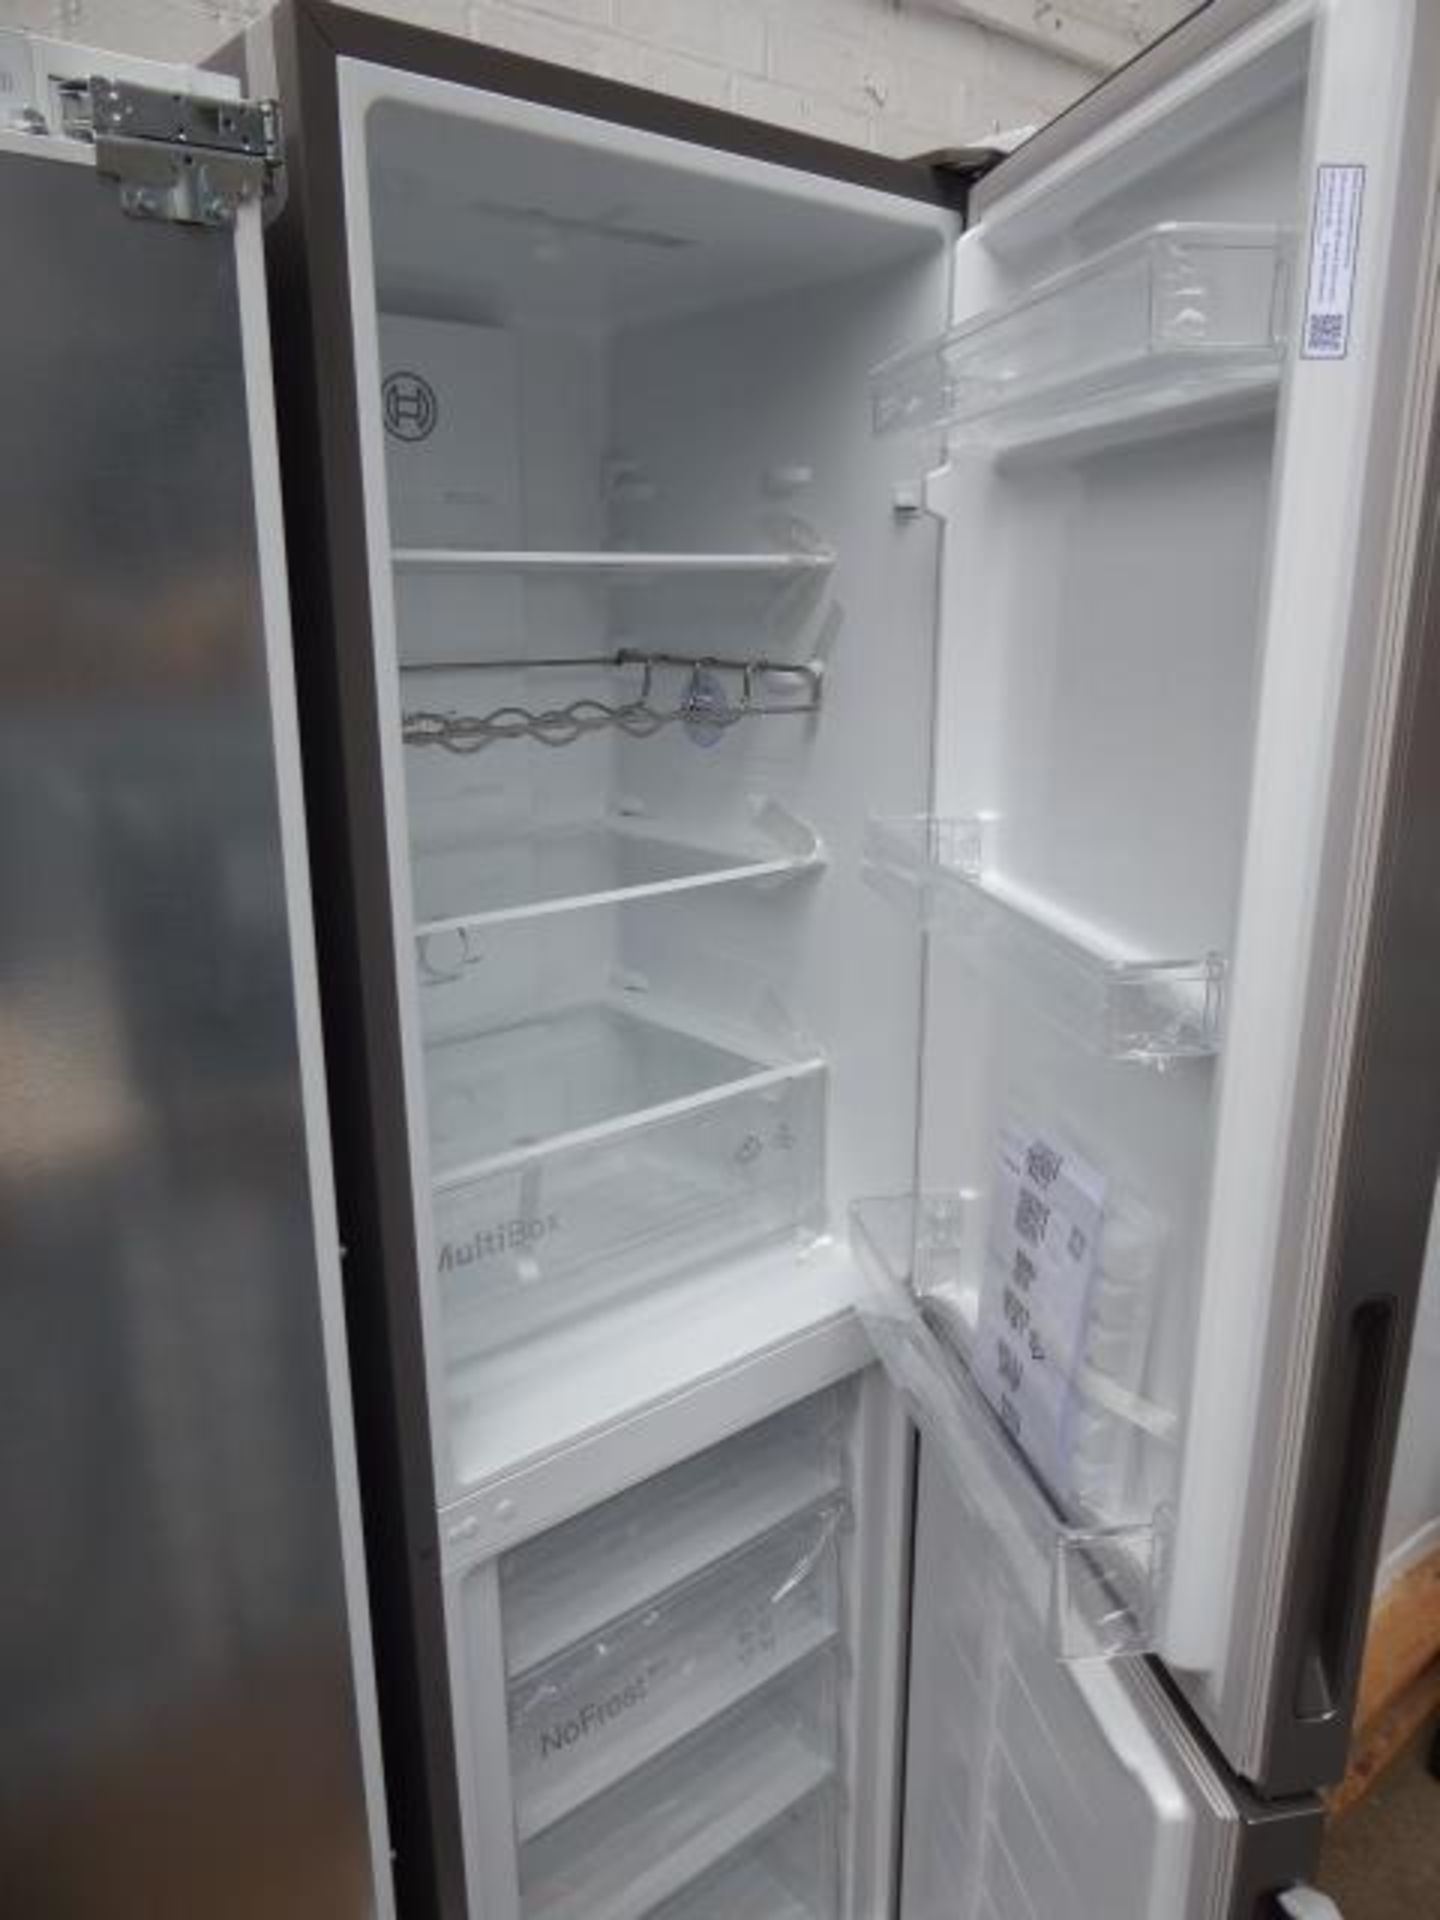 KGN27NLFAGB Bosch Free-standing fridge-freezer - Image 2 of 2